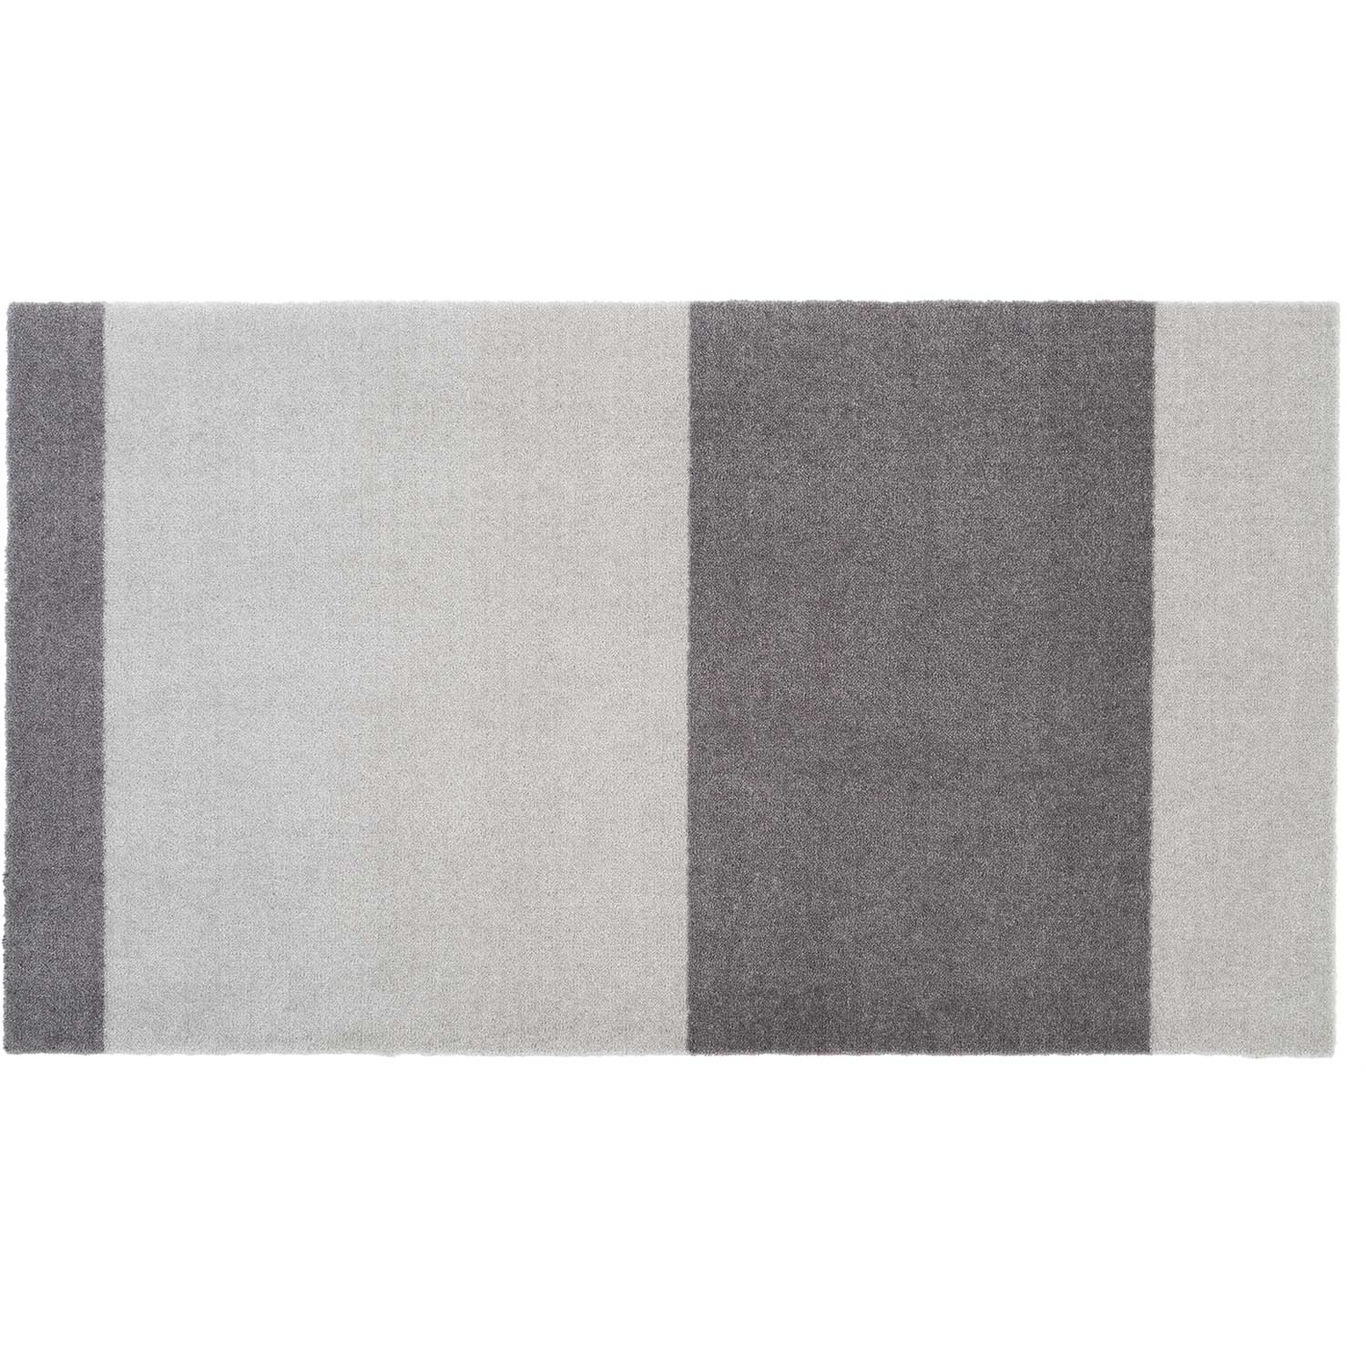 Stripes Rug Steel Grey / Light Grey, 67x120 cm